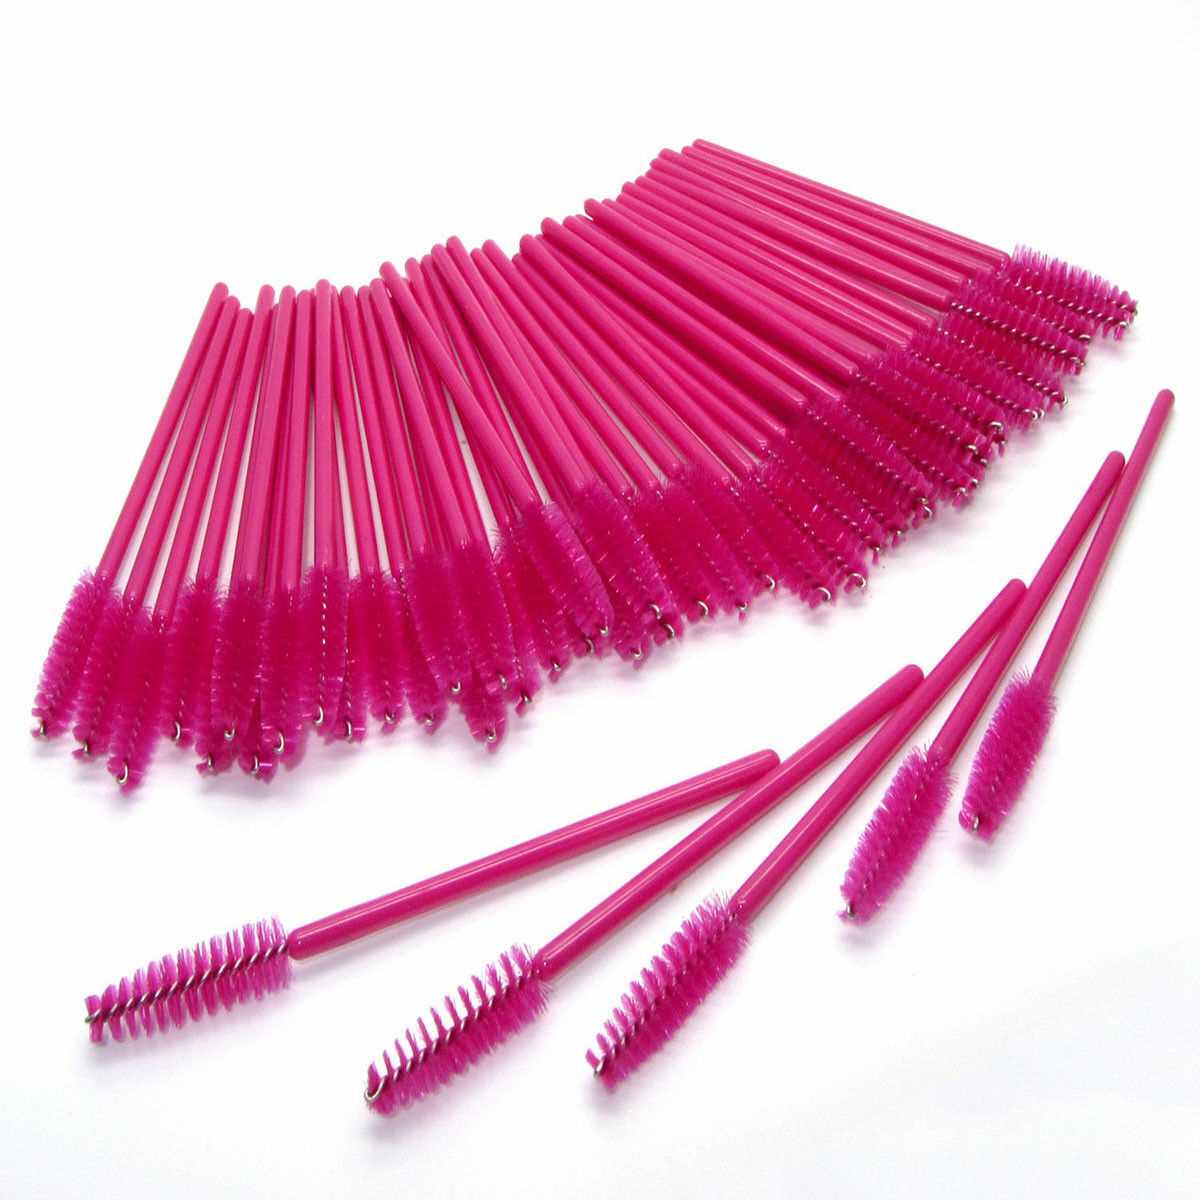 50PCS Hot Pink Disposable Mascara Wands Eyelash Brushes Brow Lash Extension Spoolie Applicator